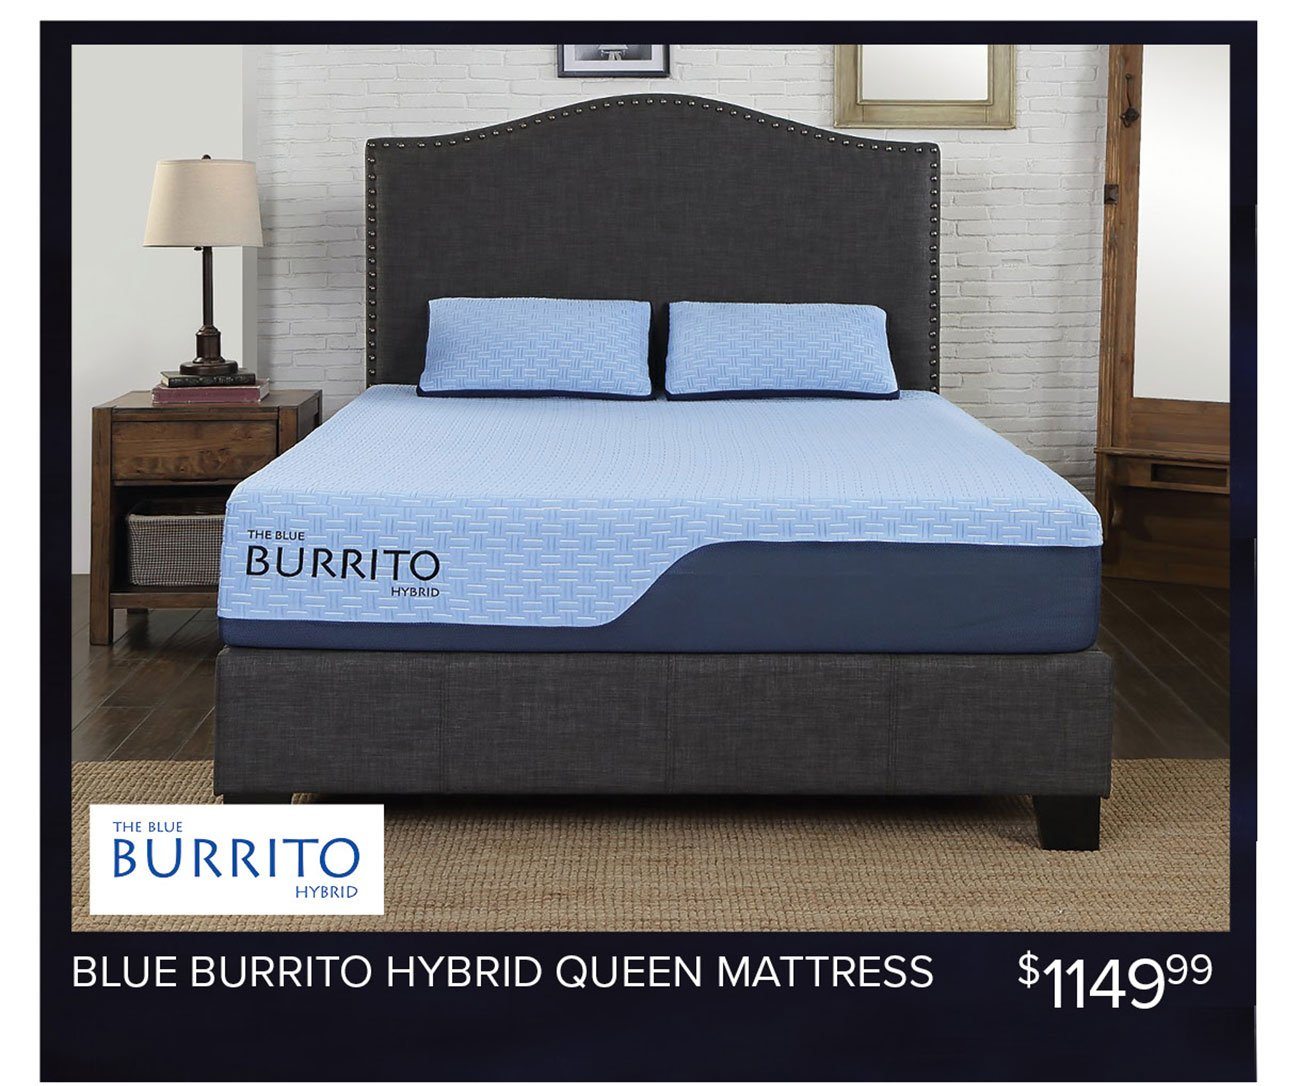 Blue-burrito-hybrid-queen-mattress